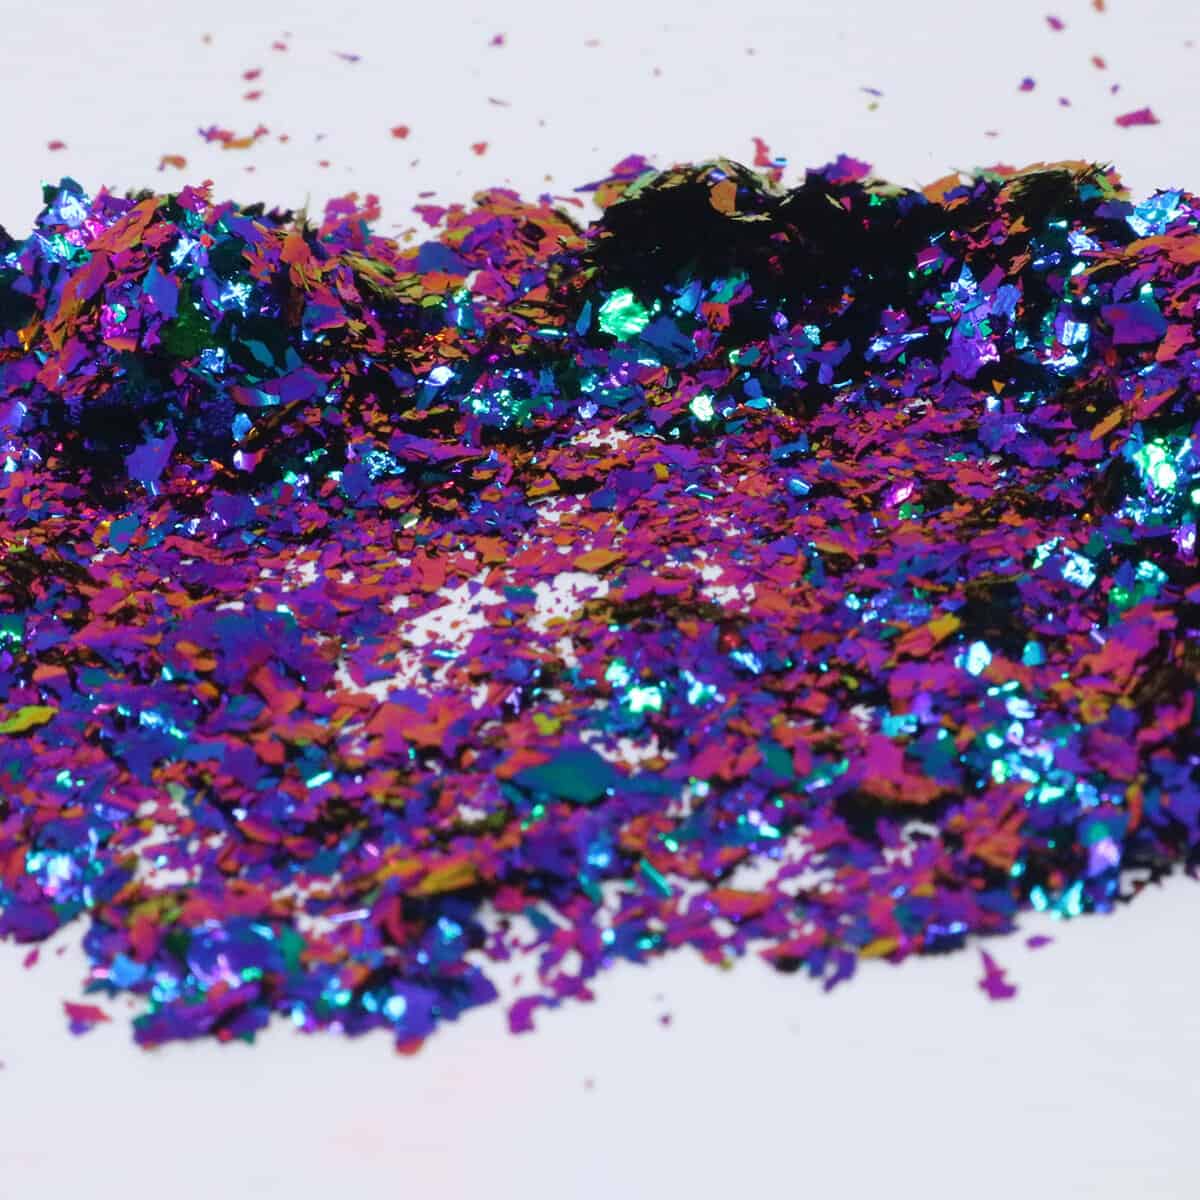 Blue and purple chroma glitter flakes